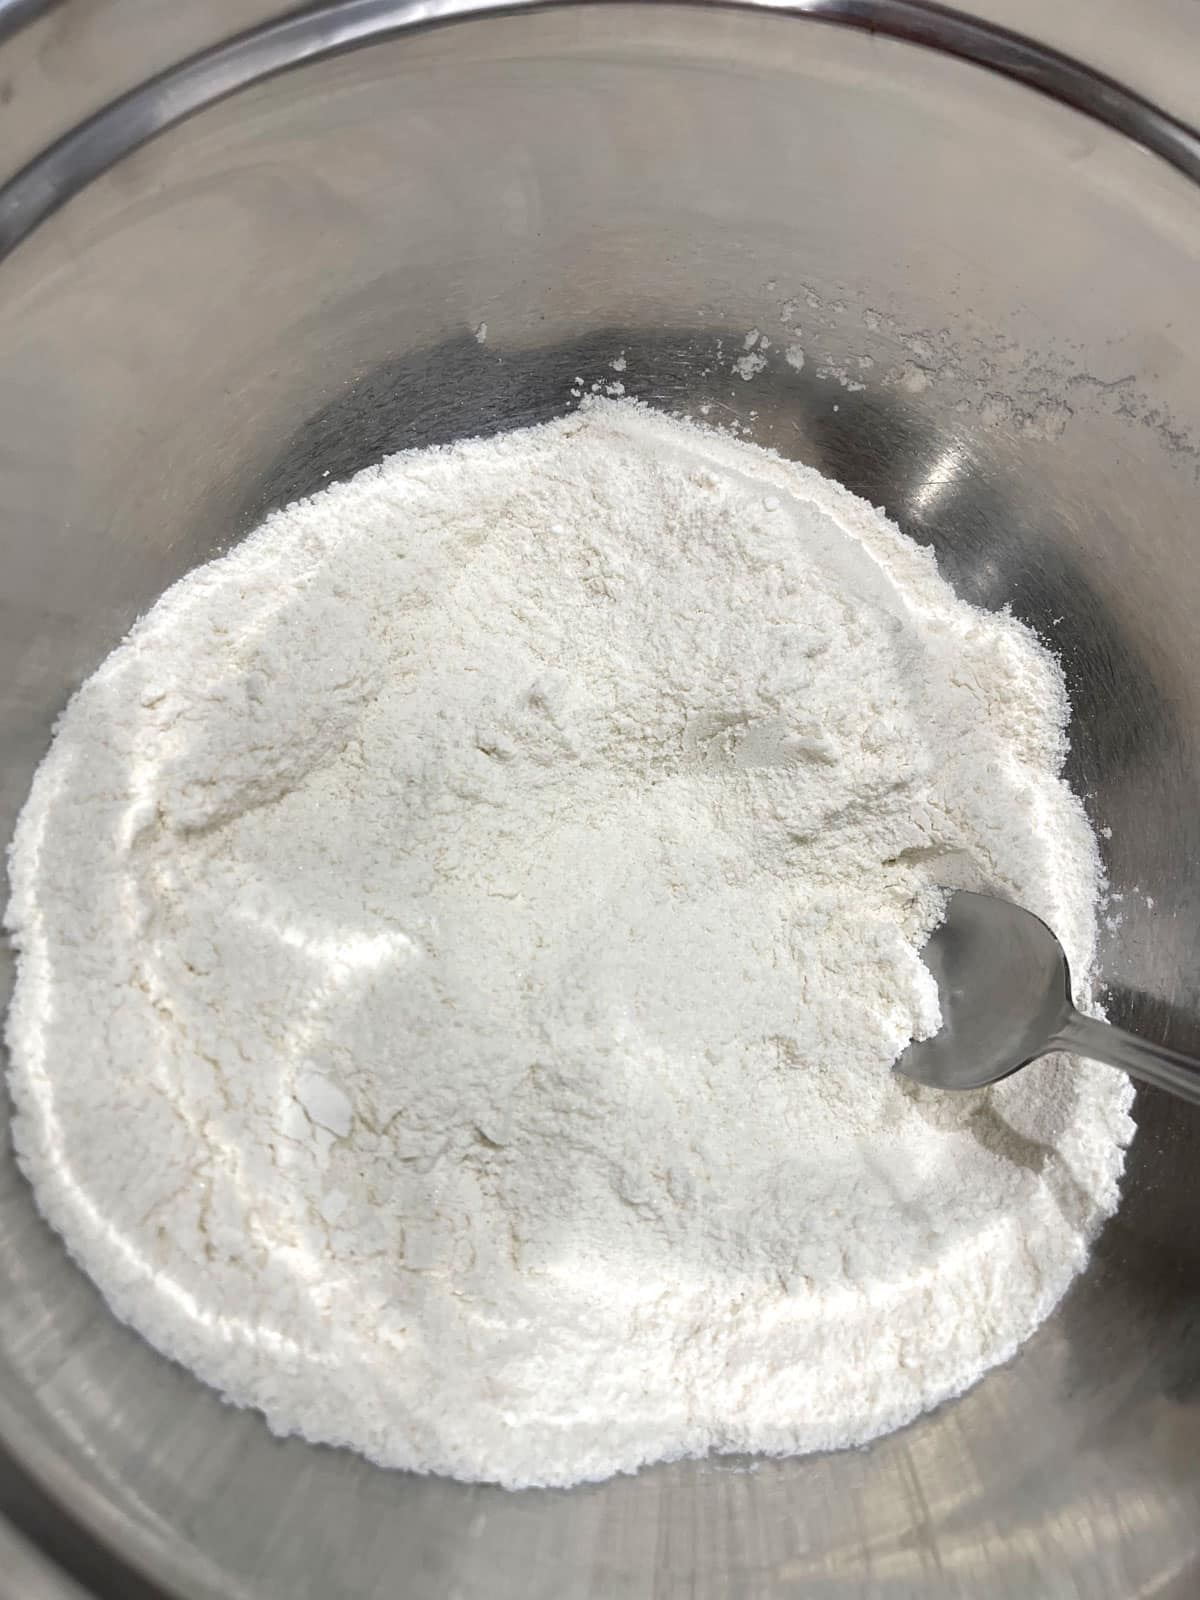 flour mixed with sugar, baking powder